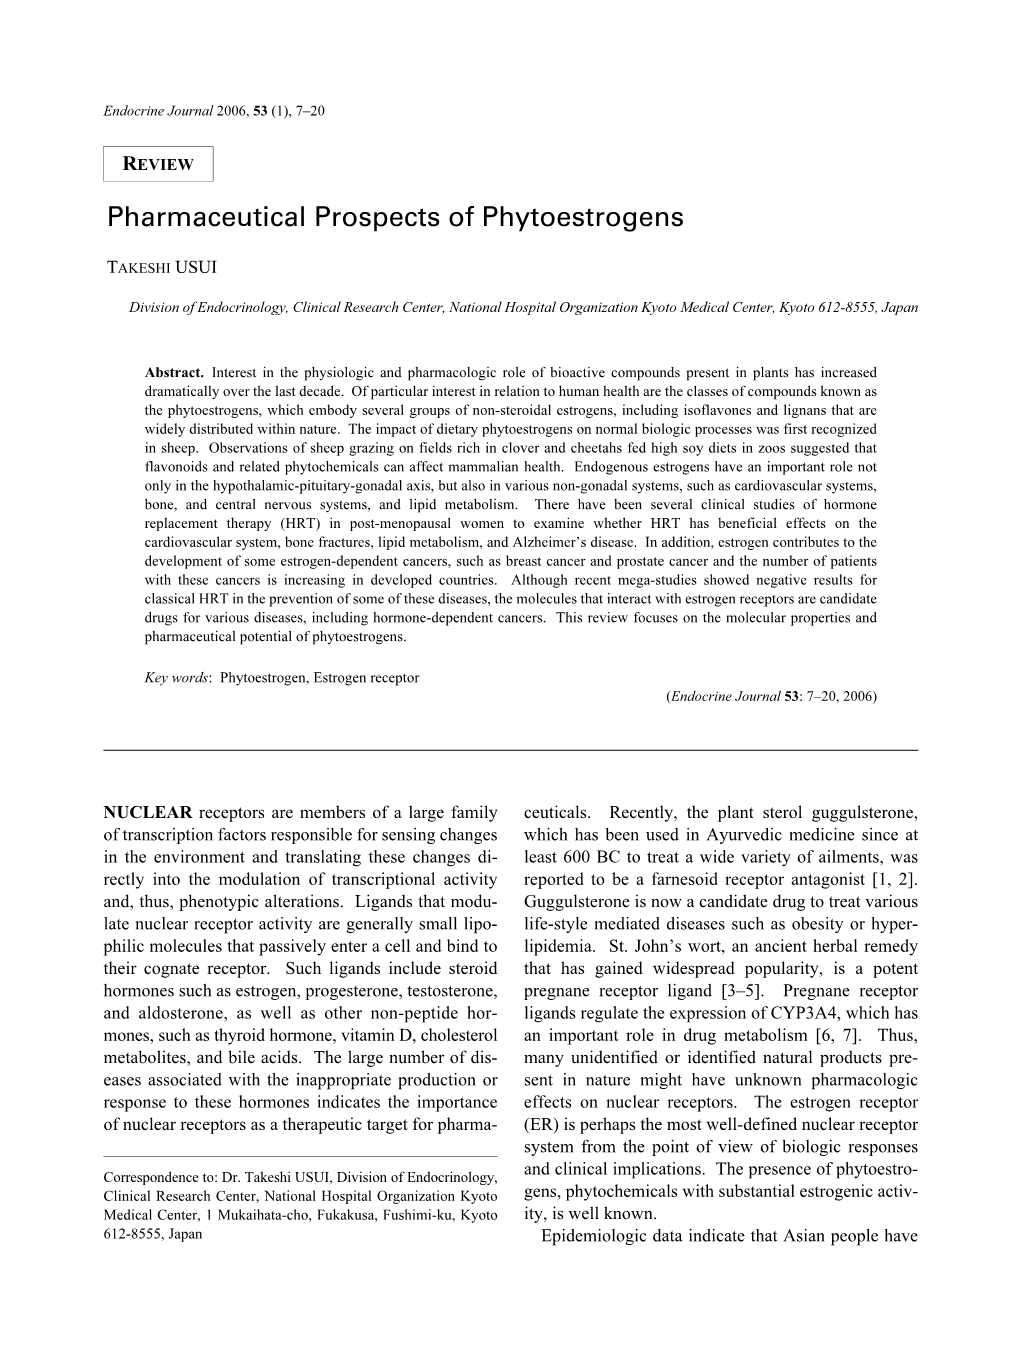 Pharmaceutical Prospects of Phytoestrogens